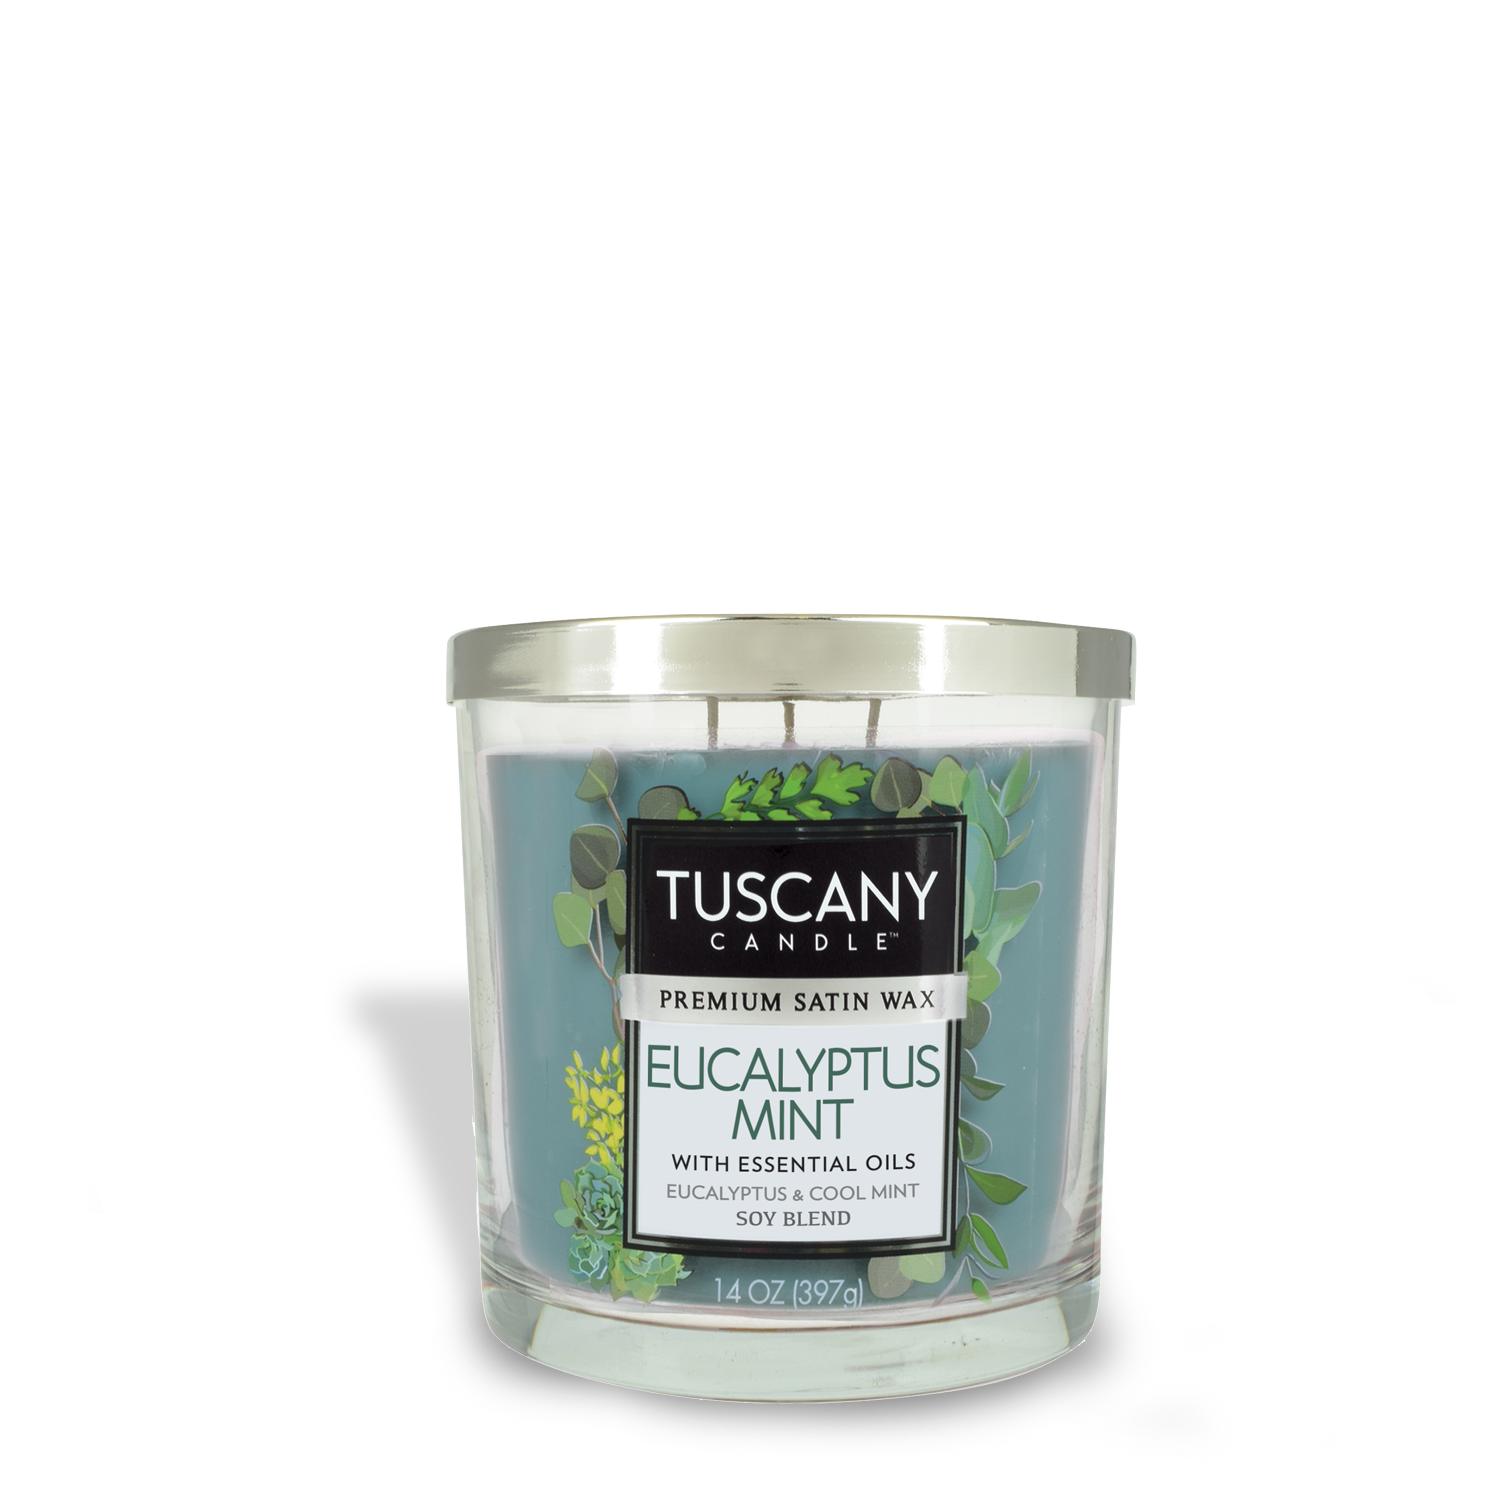 Tuscany Candle Candle, Mahogany Suede - 1 candle, 18 oz